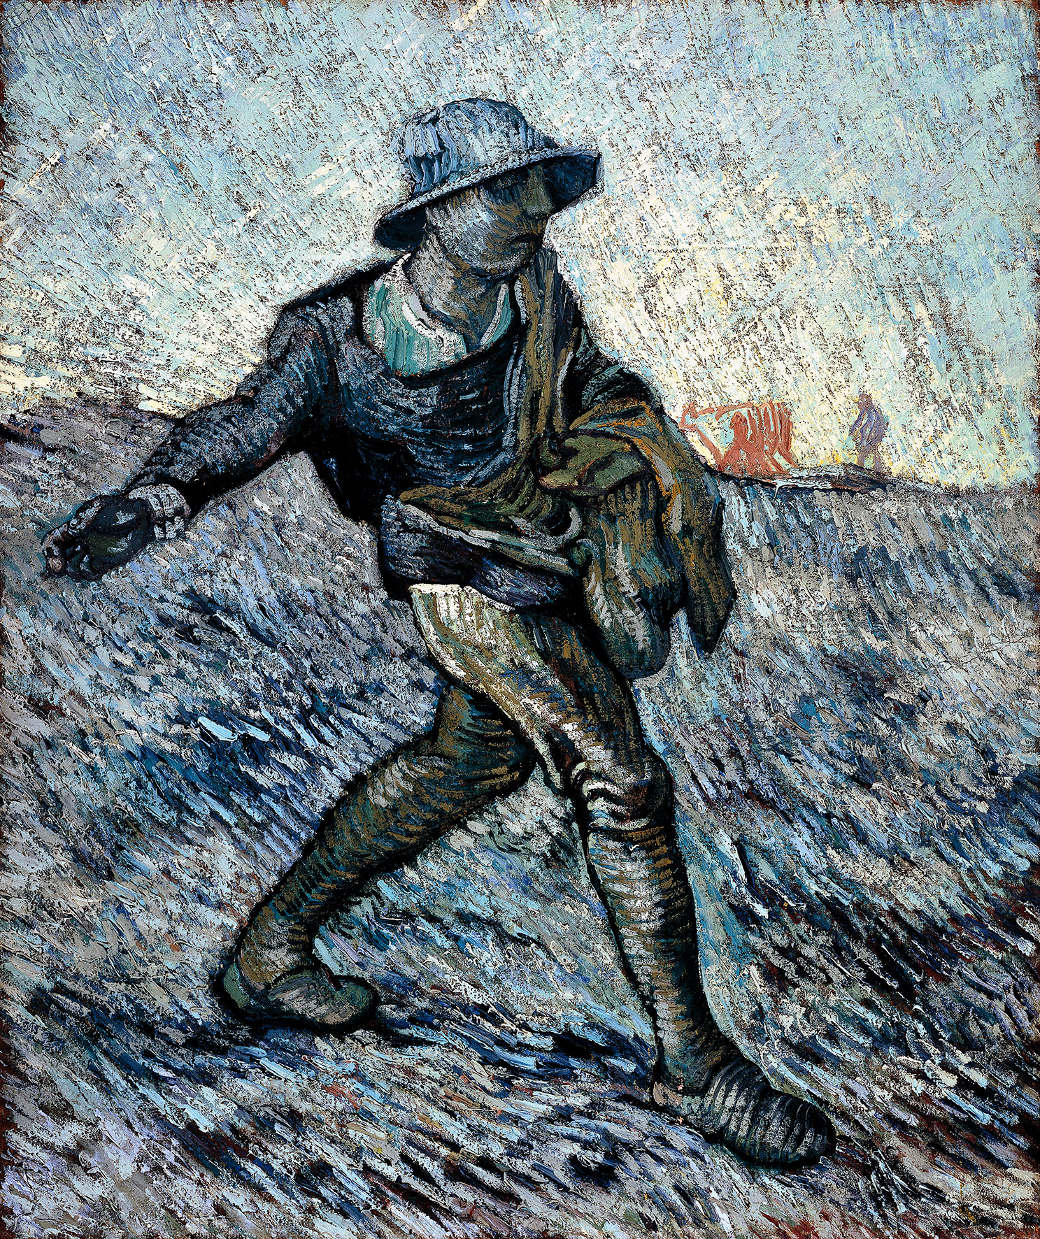 Vincent van Gogh, Il seminatore (da Millet), 1890, olio su tela, cm 64 x 55. Otterlo, Kröller-Müller Museum